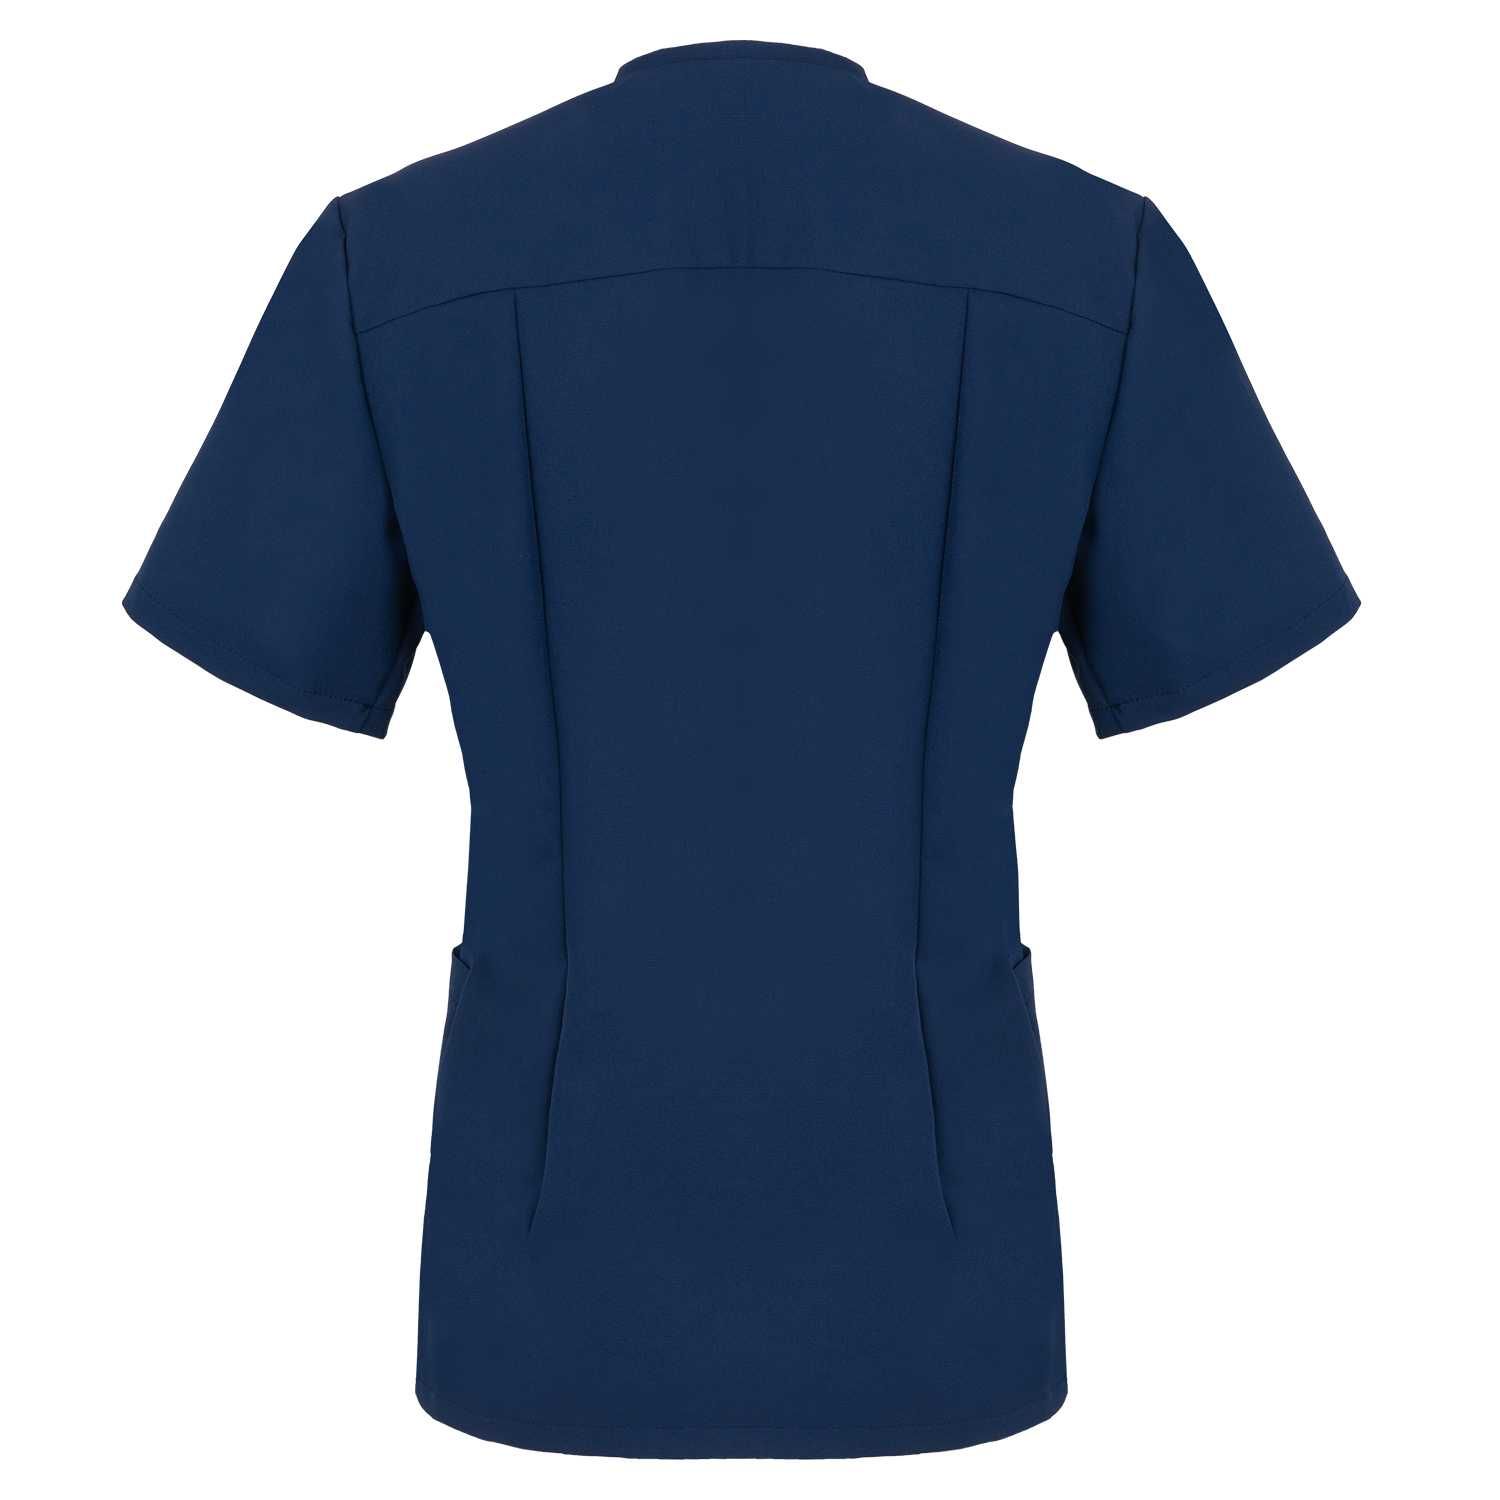 Bluza Medyczna Fresh Granatowa Sandra-Med Komplet medyczny Rozmiar L